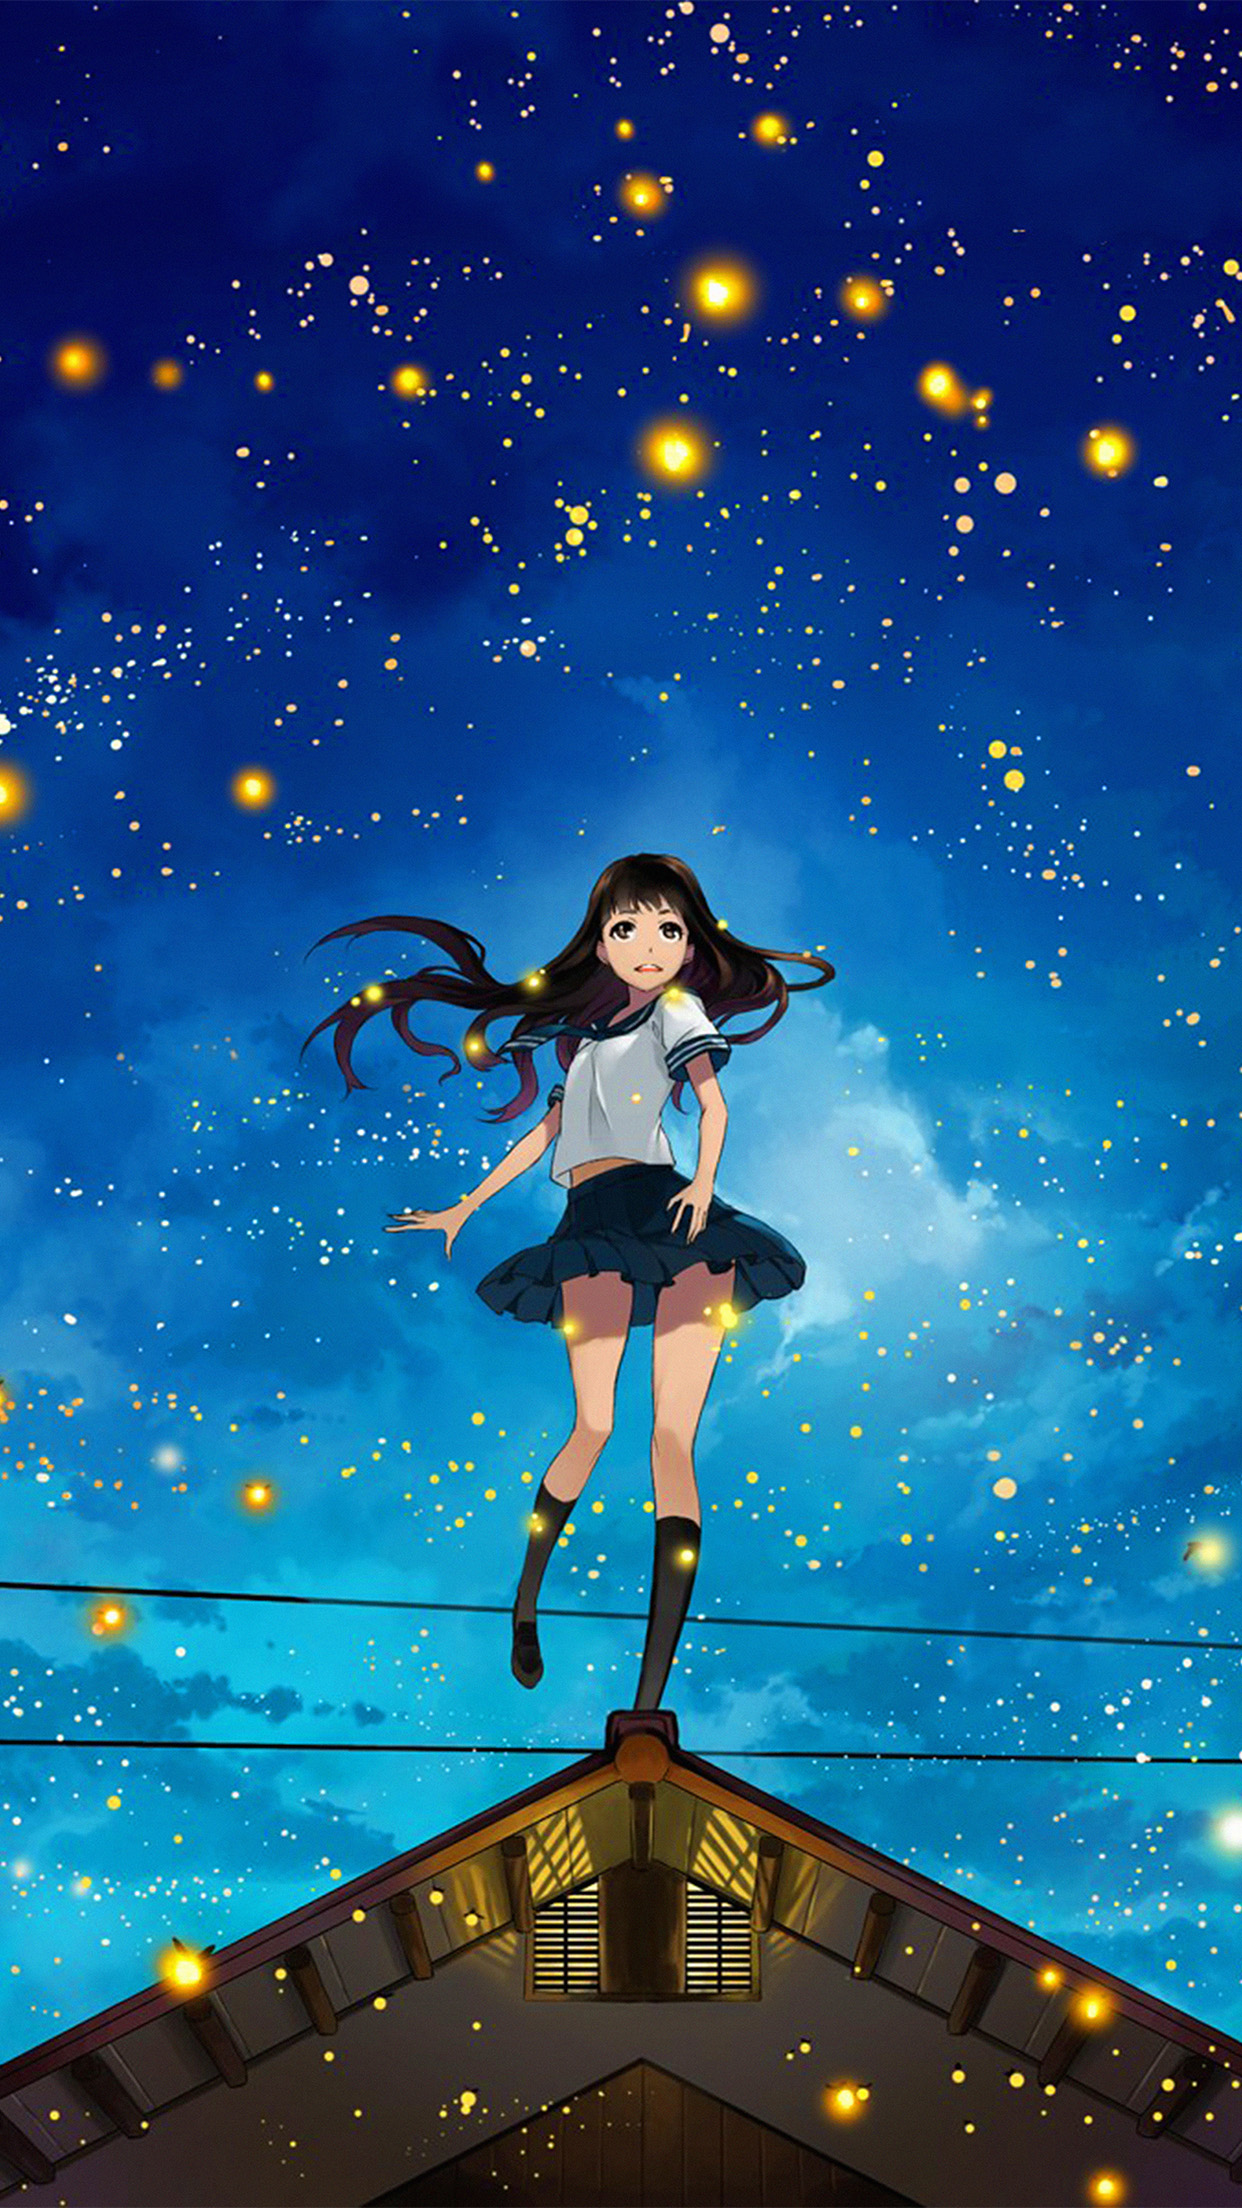 iPhone X wallpaper. girl anime star space night illustration art